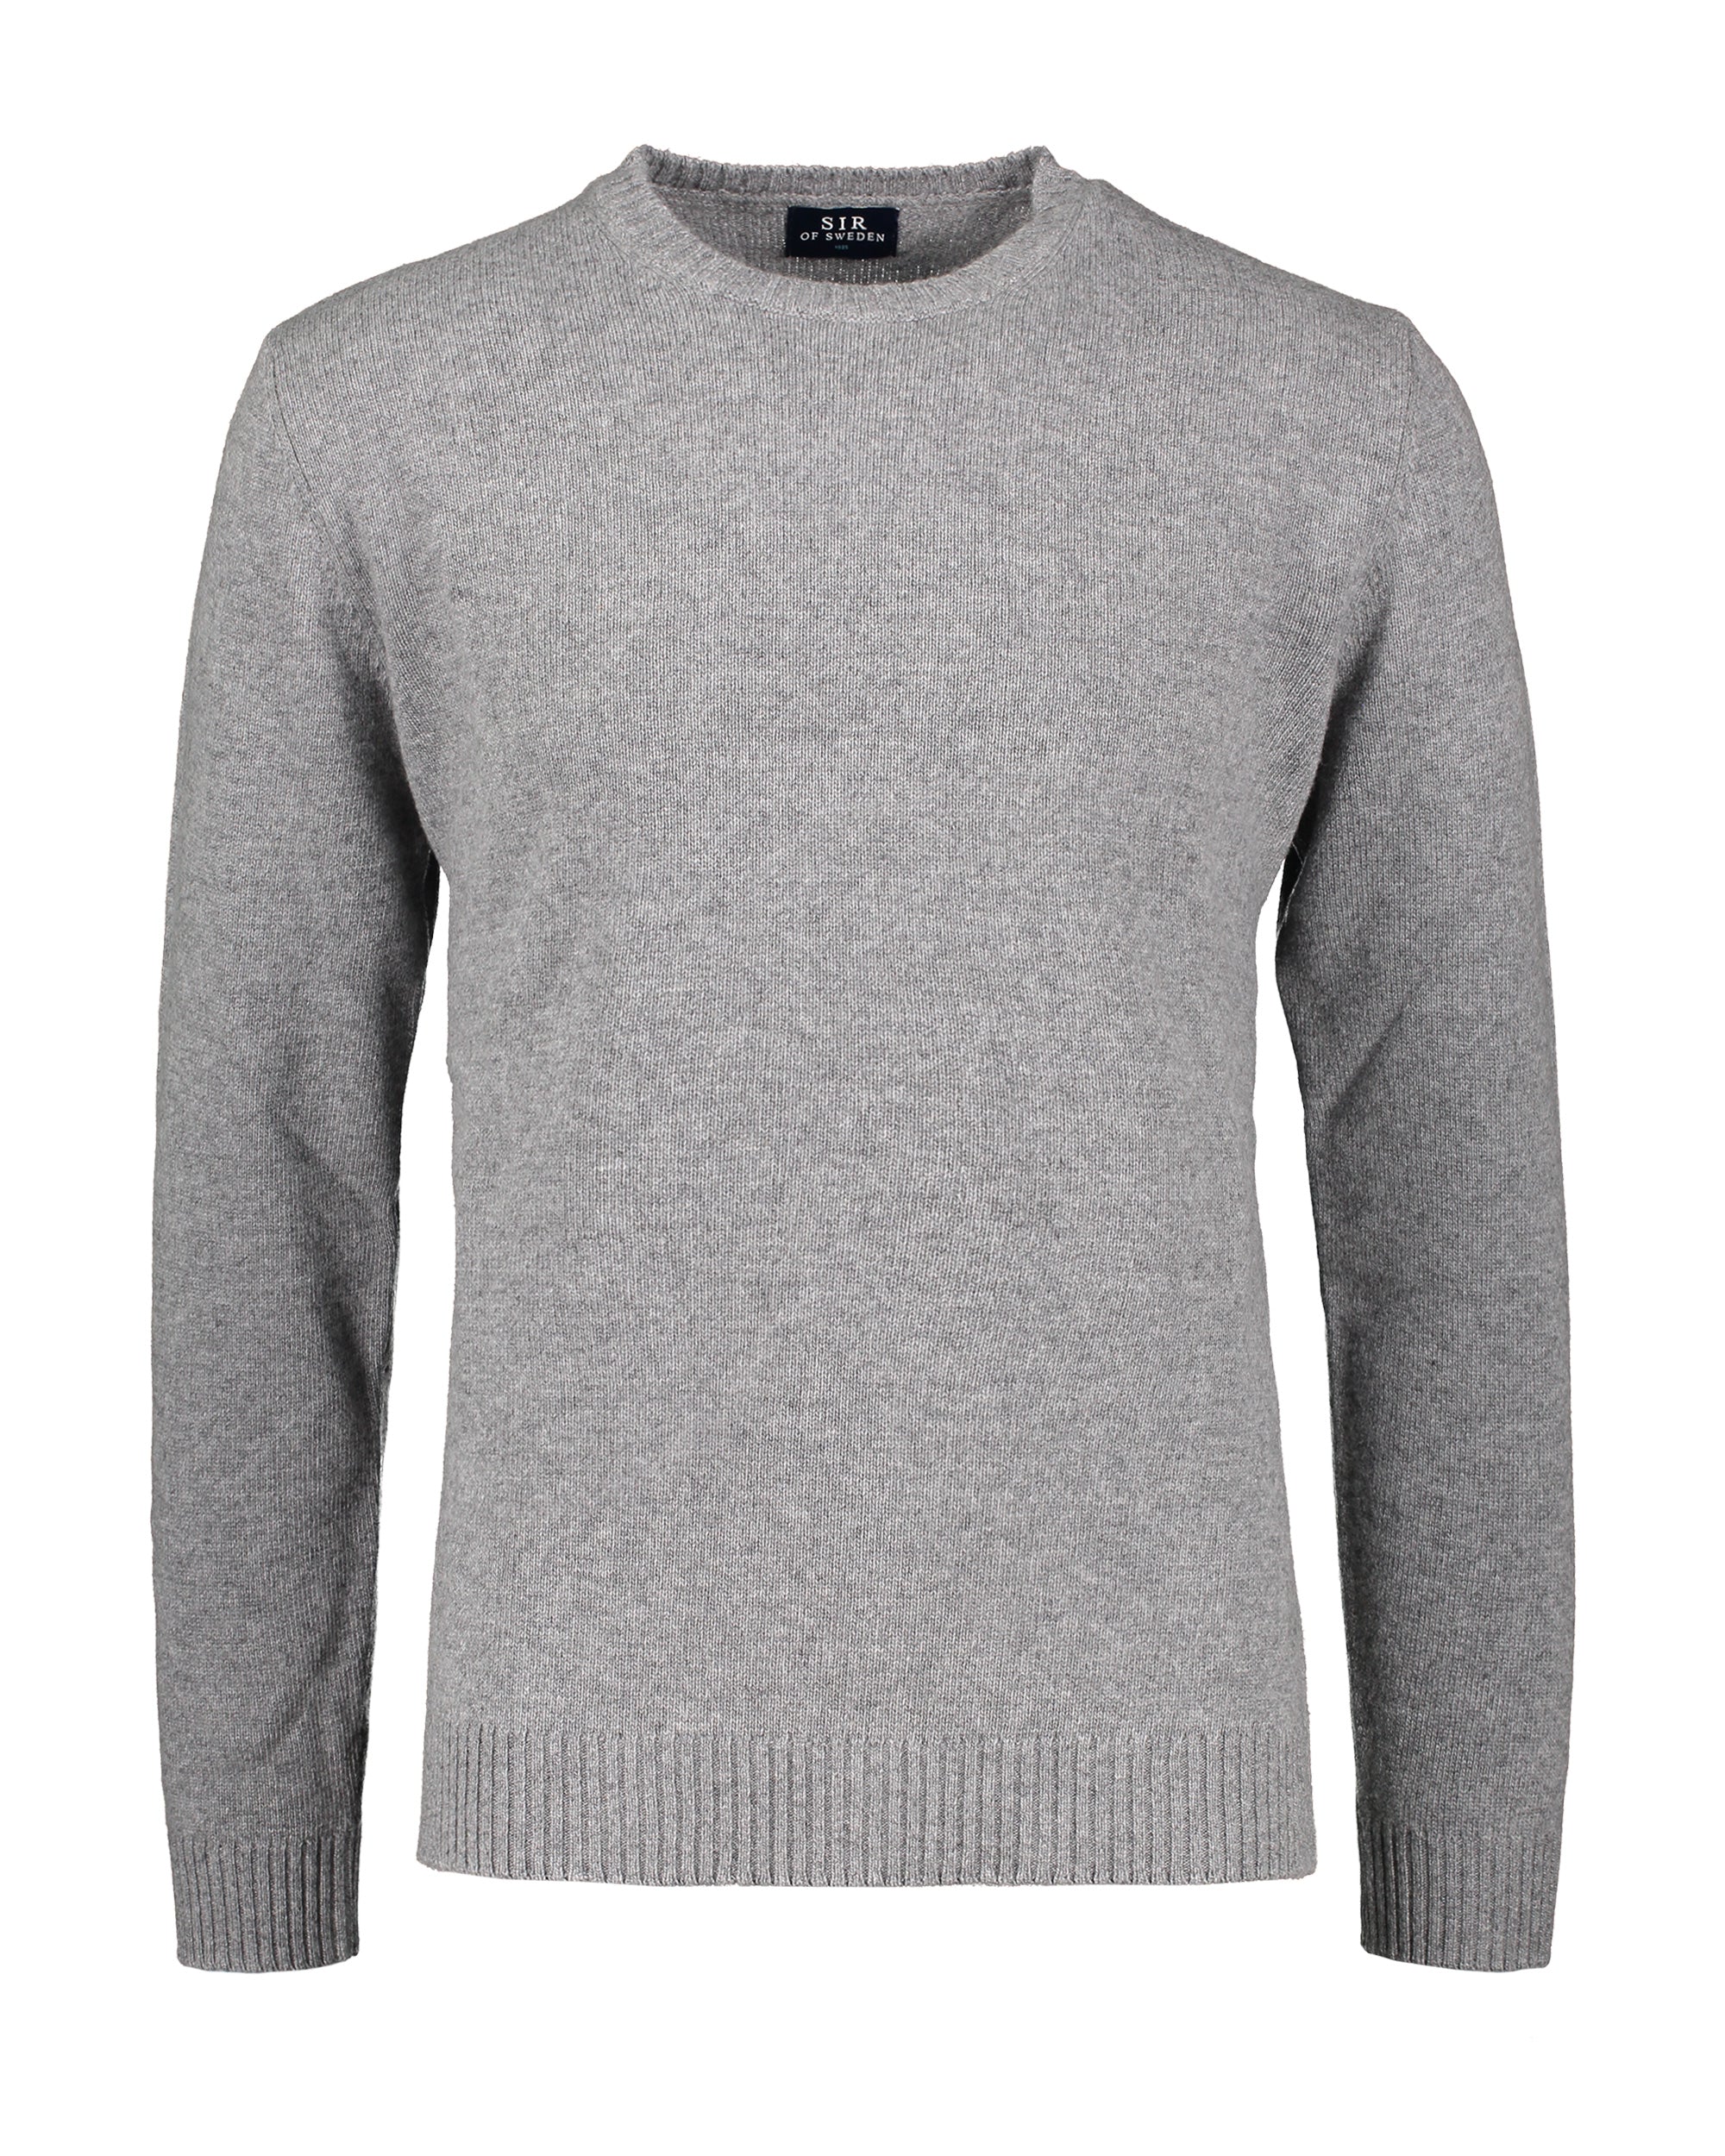 Harald Grey Crewneck Sweater